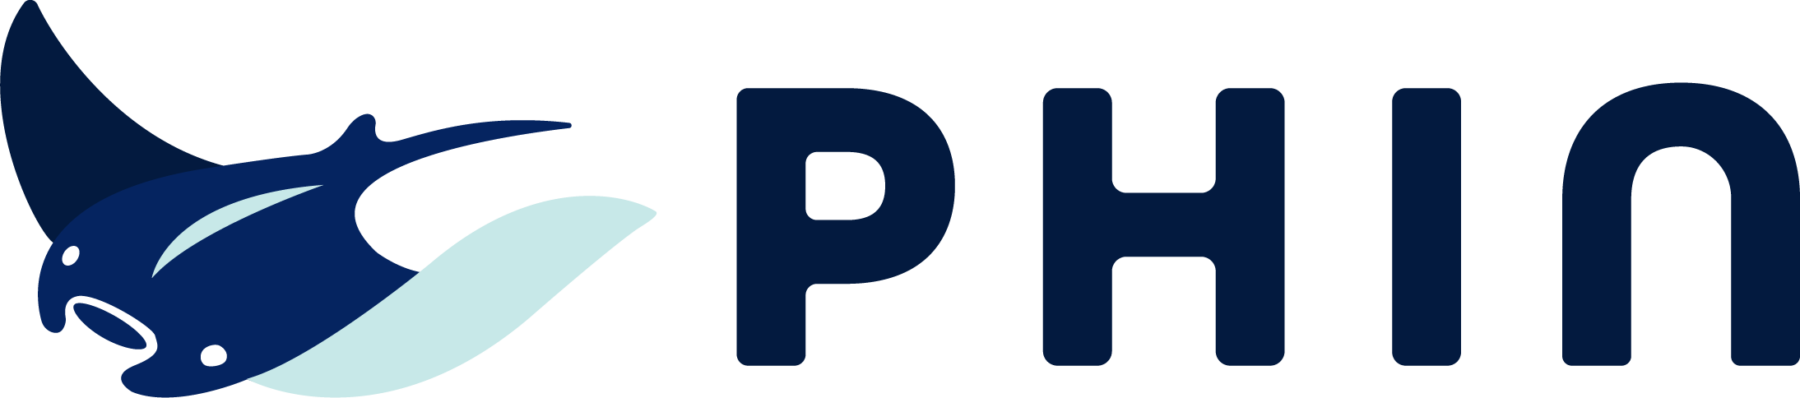 Phin-Security-Logo_Blue-1